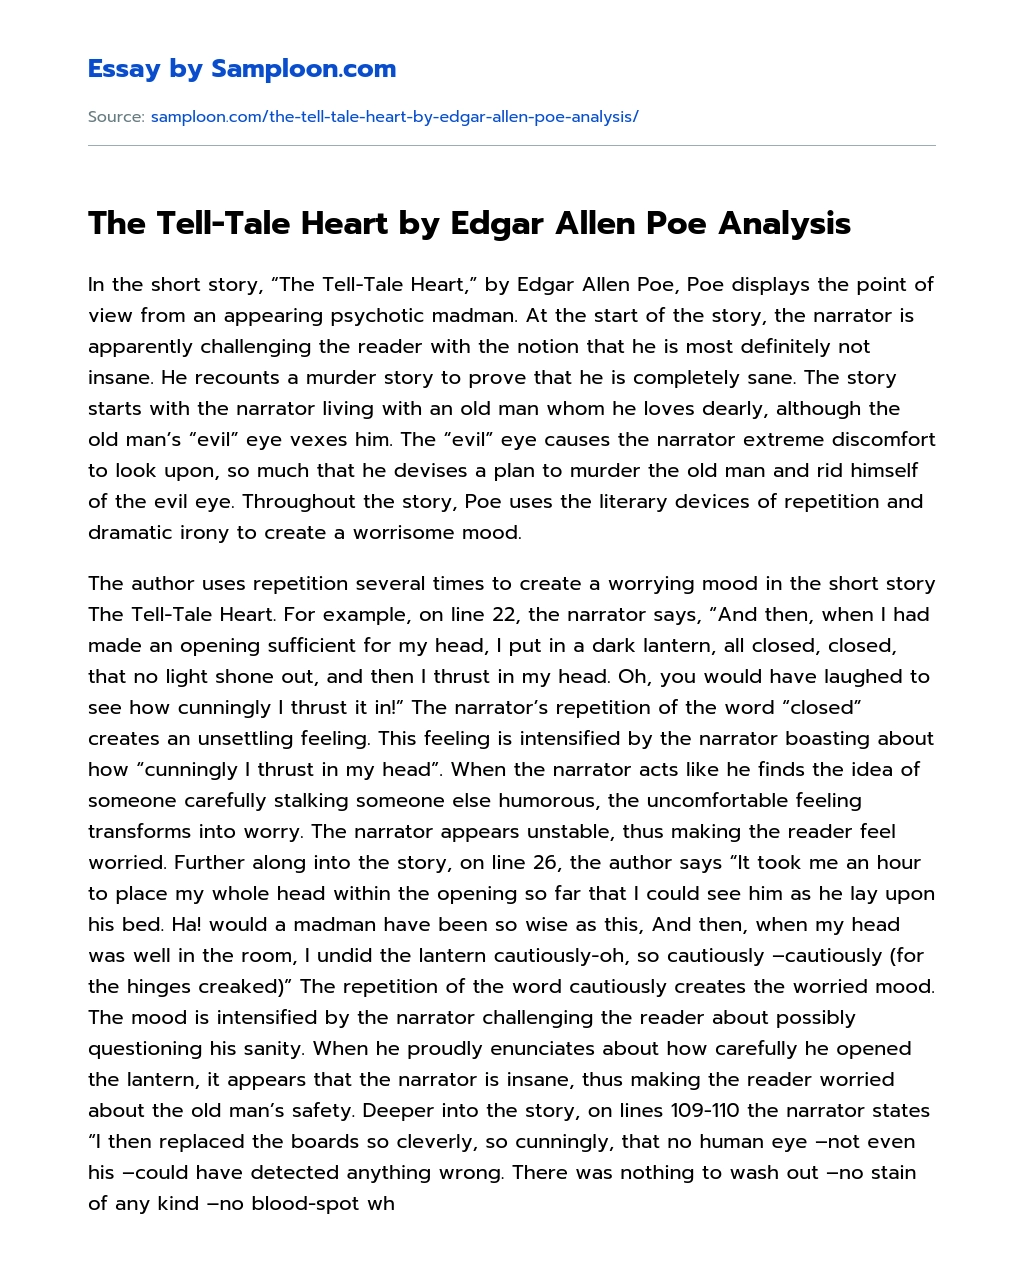 The Tell-Tale Heart by Edgar Allen Poe Analysis essay